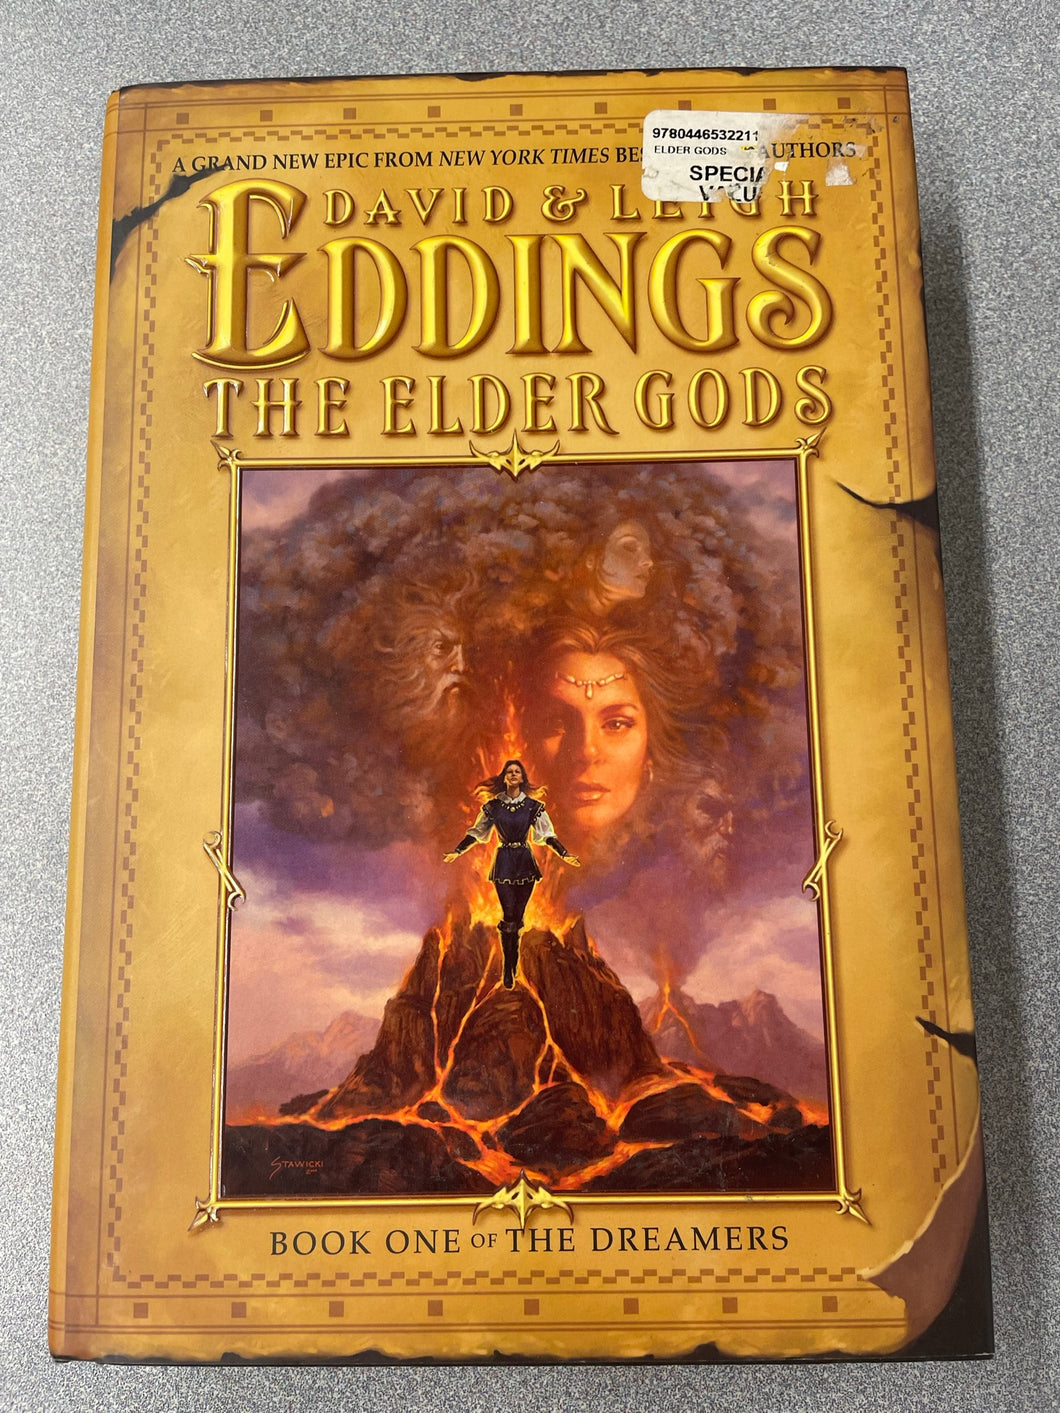 Eddings, David and Leigh Eddings, The Elder Gods [2003] SF 9/23